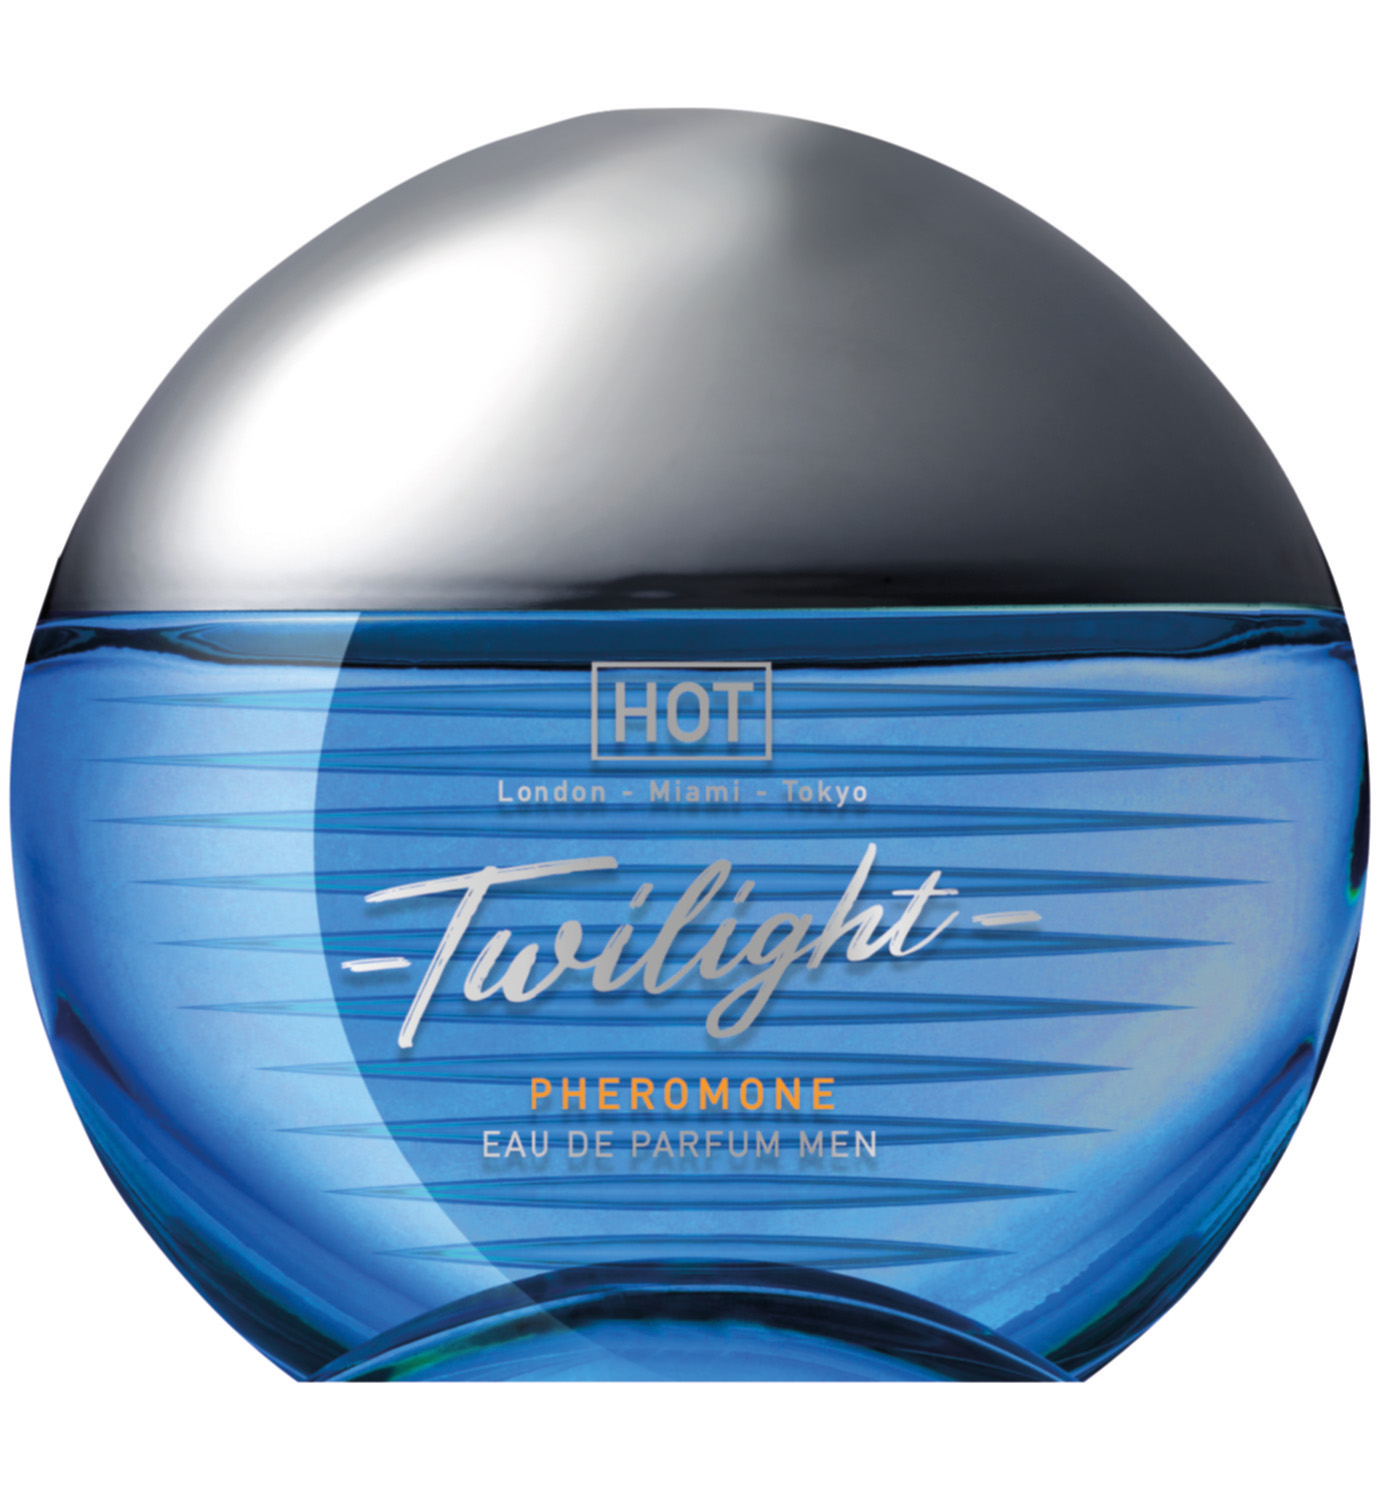 HOT Twilight Pheromone Parfum men 15ml